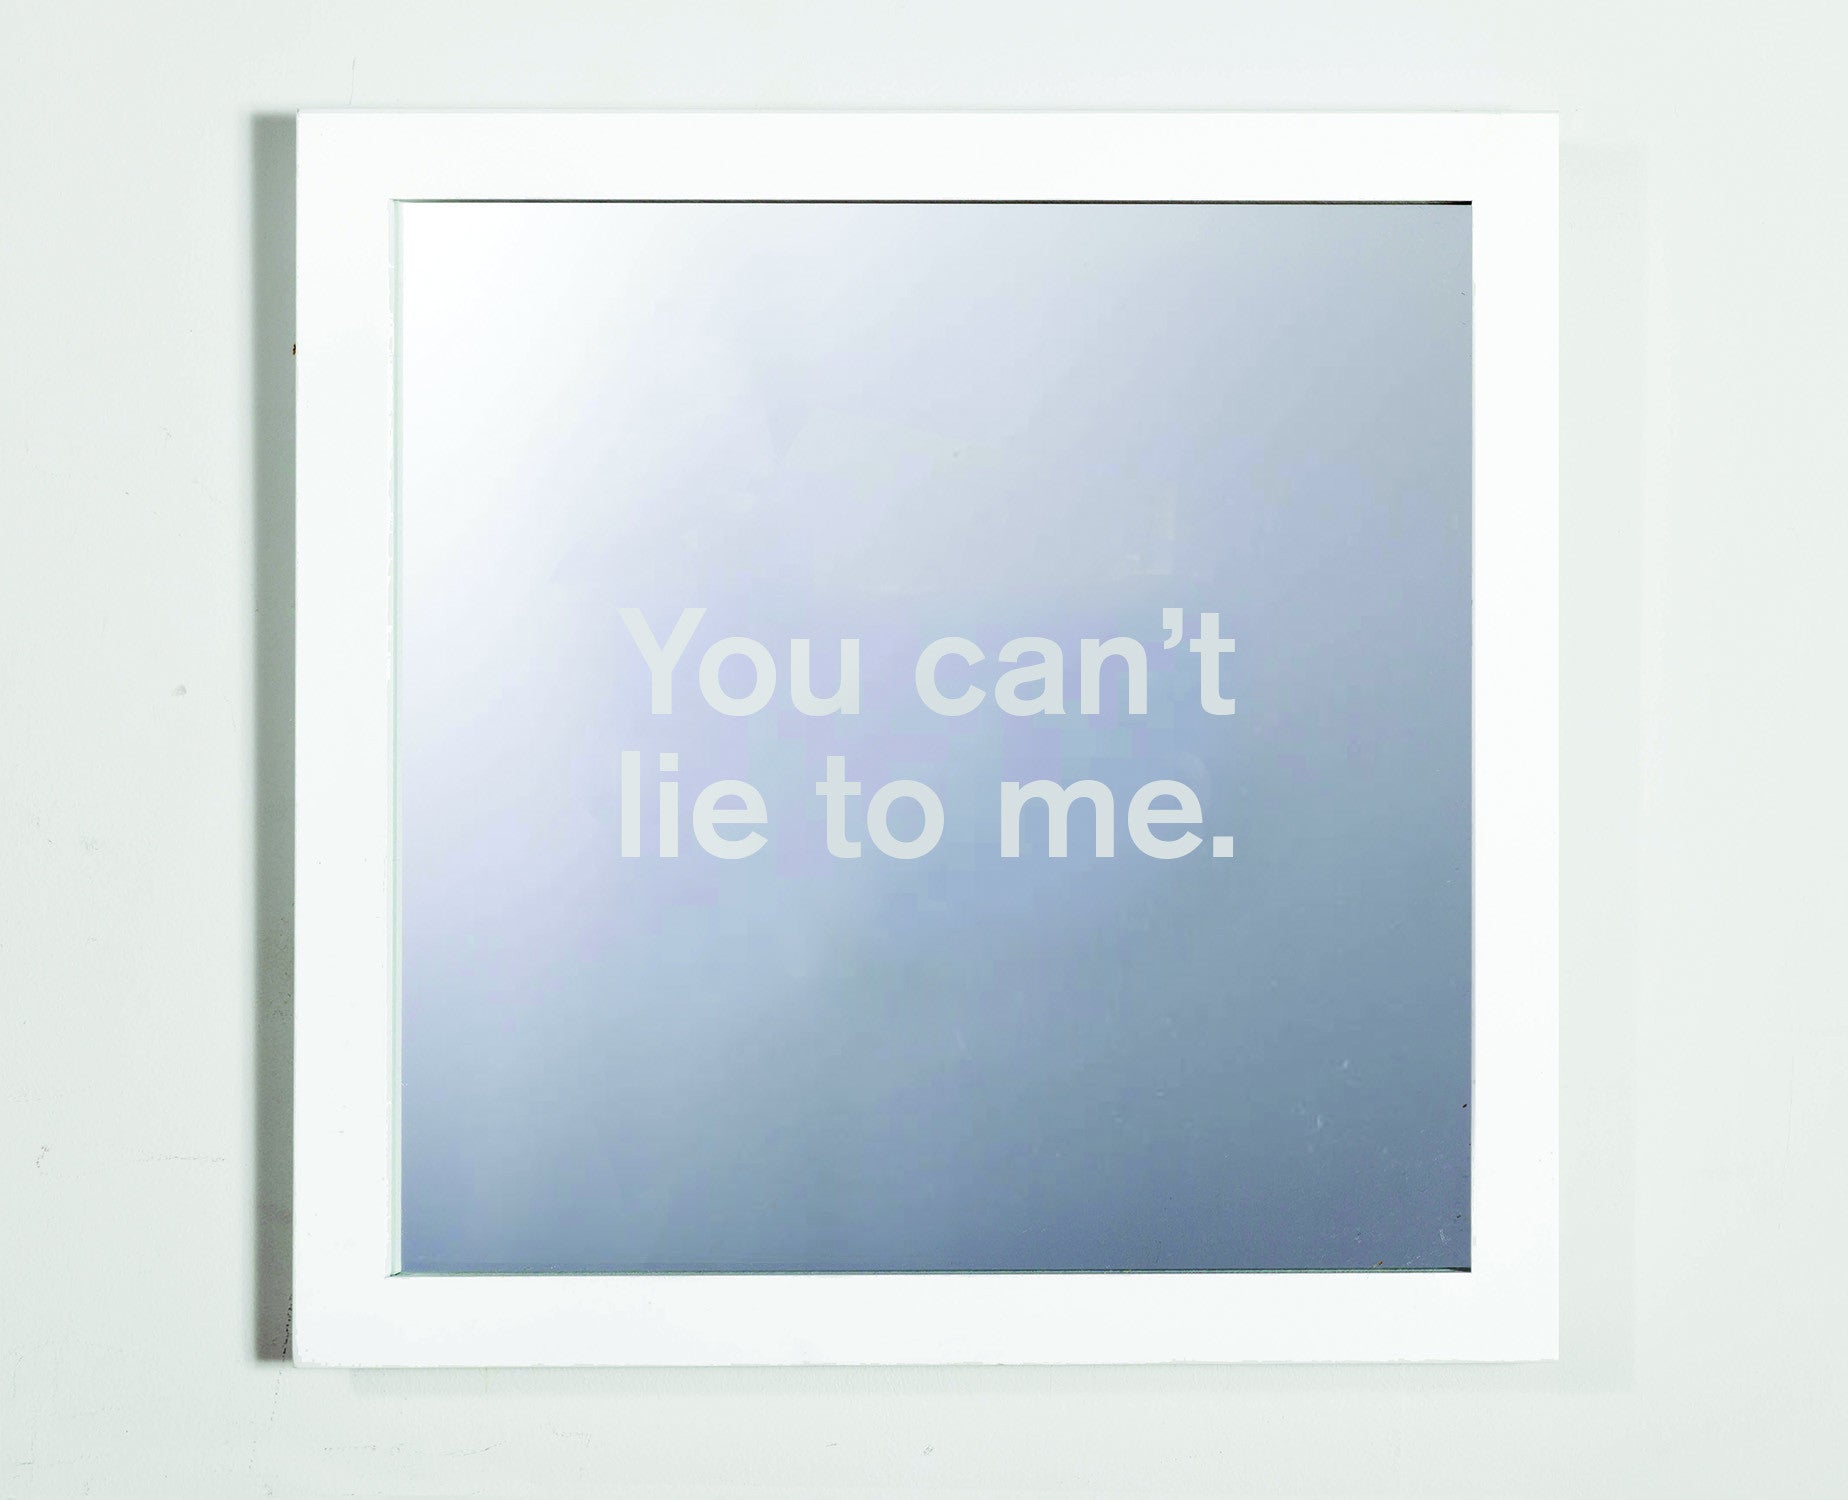 Lisa Levy, "Self-Reflection #19 Lie"